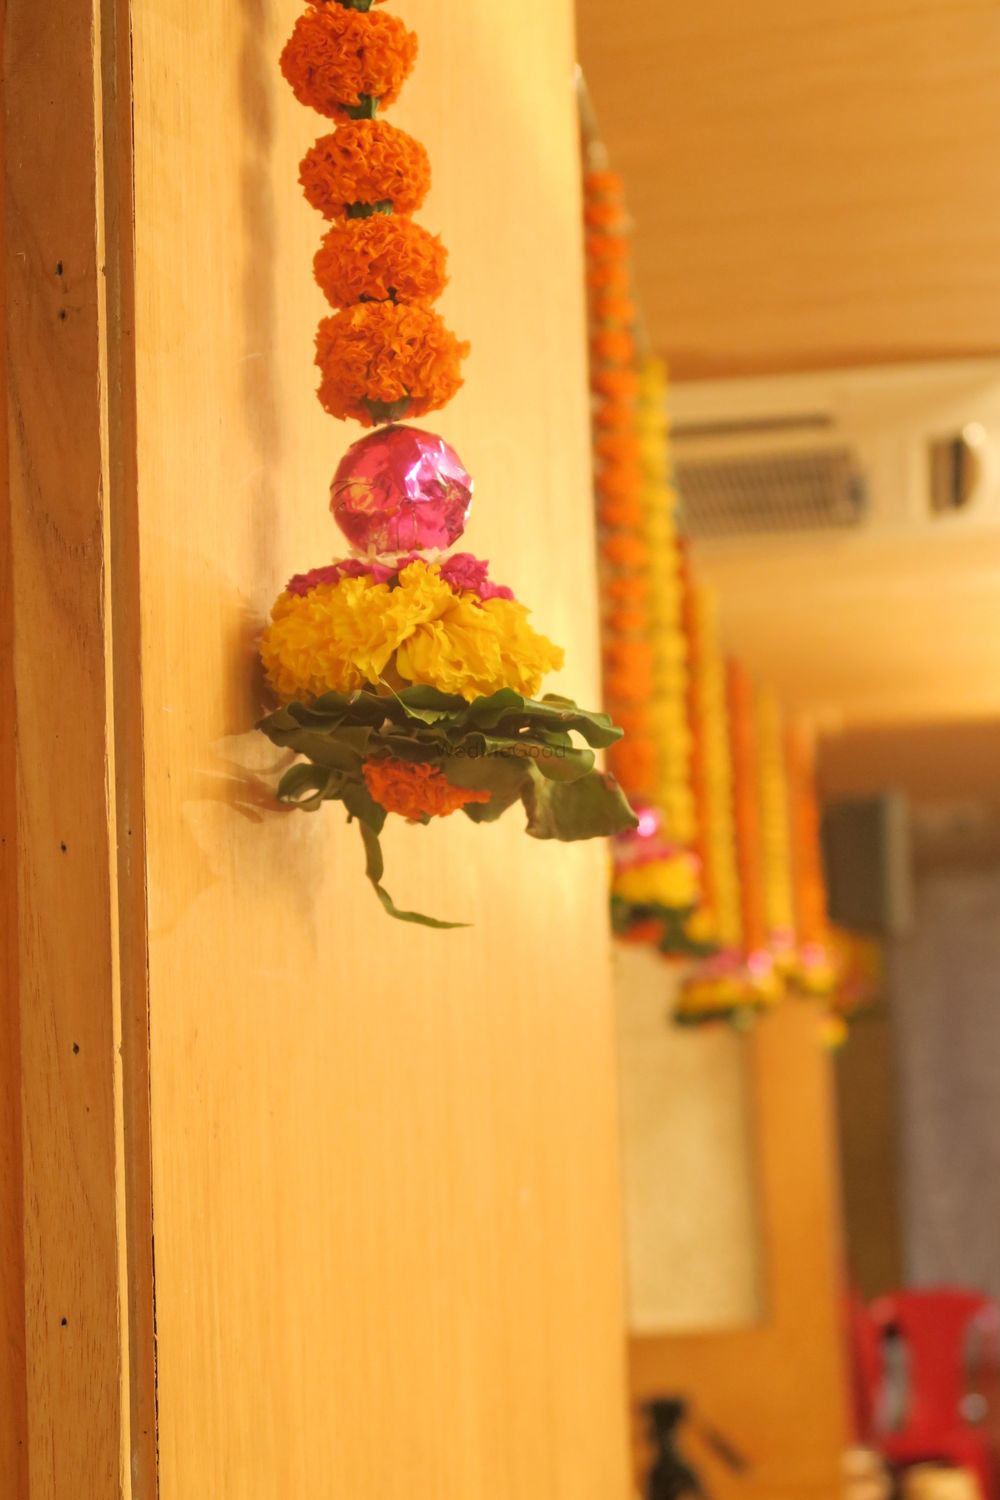 Photo From Destination Wedding @ Monteria Resort-Khopoli - By Foodzilla